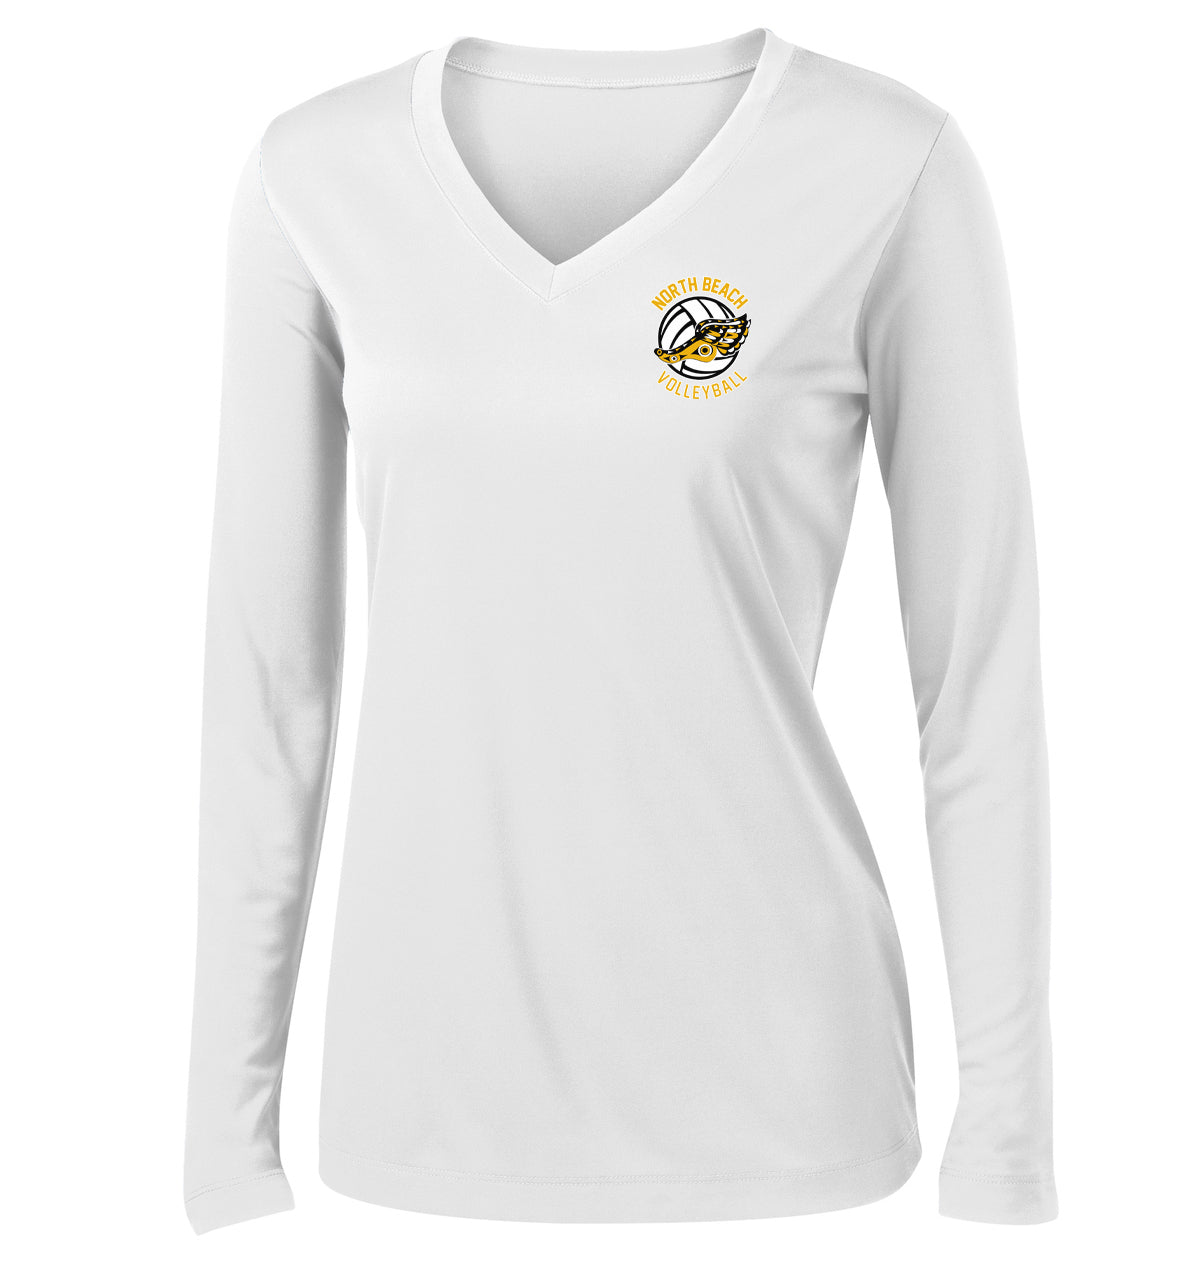 North Beach Volleyball Women's Long Sleeve Performance Shirt